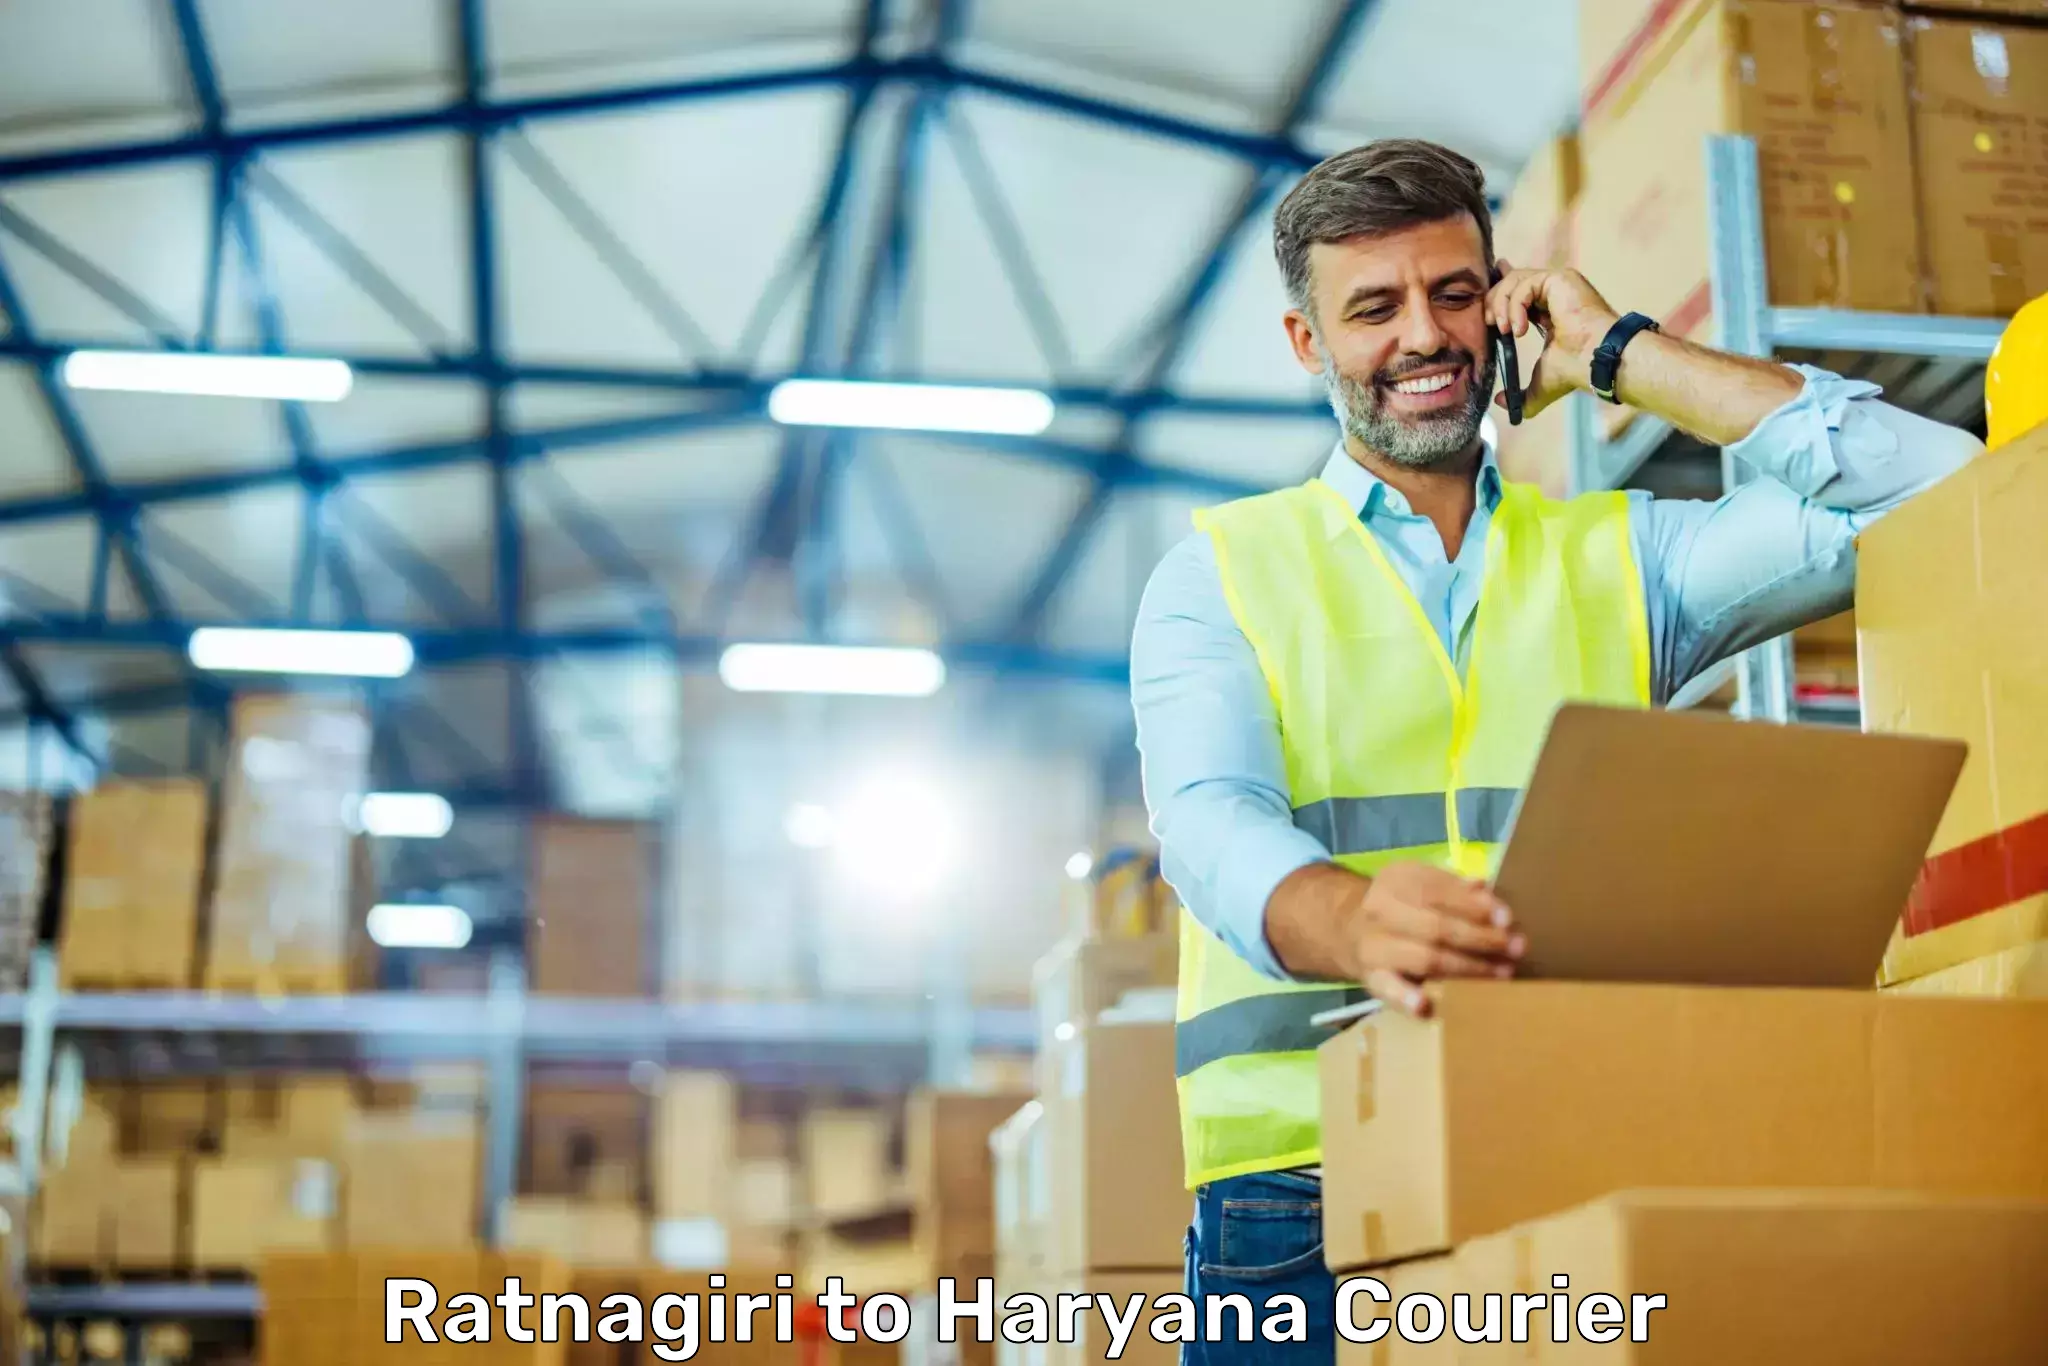 Courier service comparison Ratnagiri to Haryana